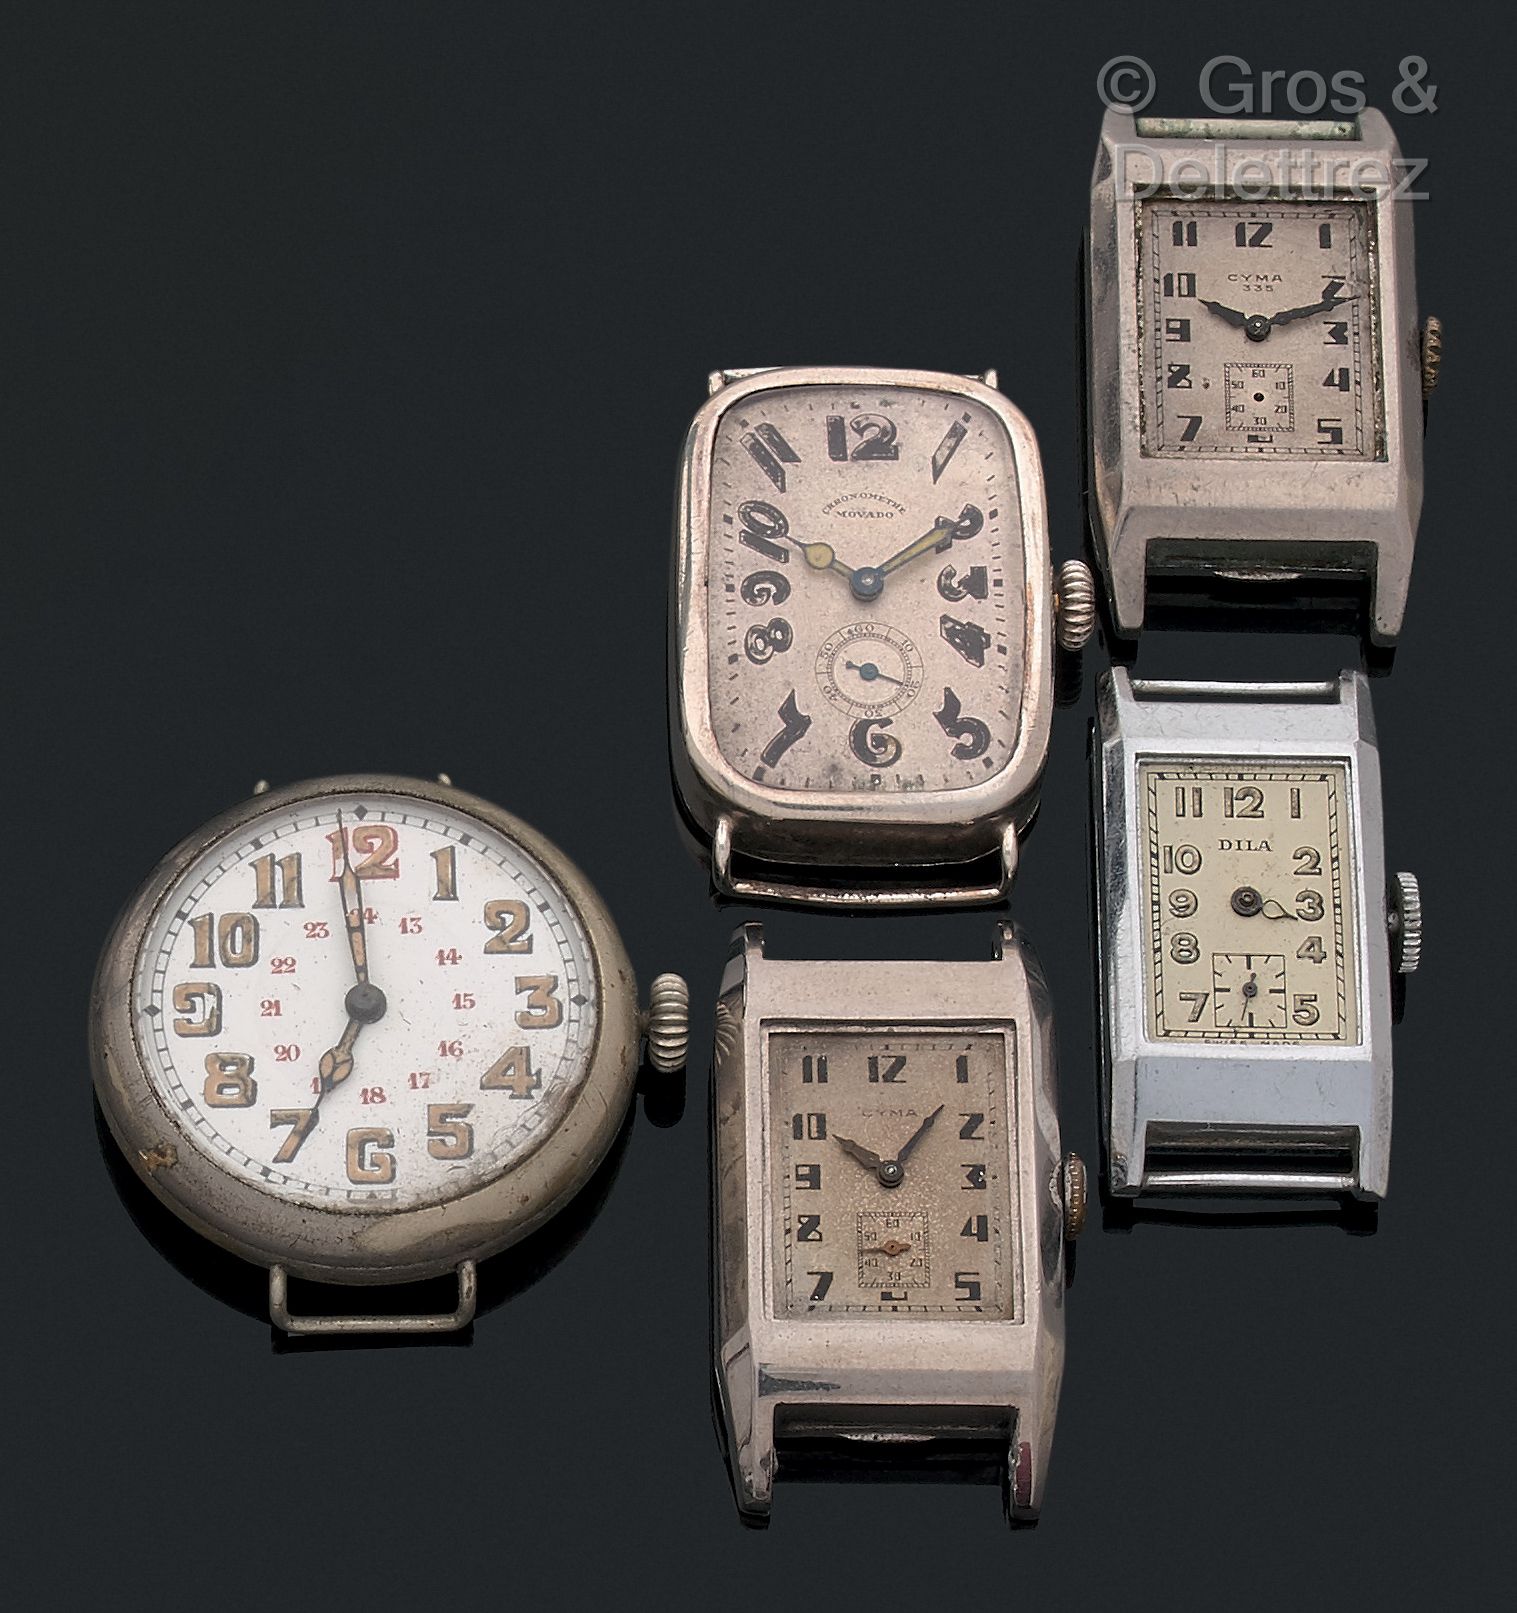 Null 拍品包括5块长方形手表和1块圆形手表，从20年代到40年代。 

- 2 手表 CYMA 335 矩形。不戴眼镜

- 1块银色MOVADO手表

-&hellip;